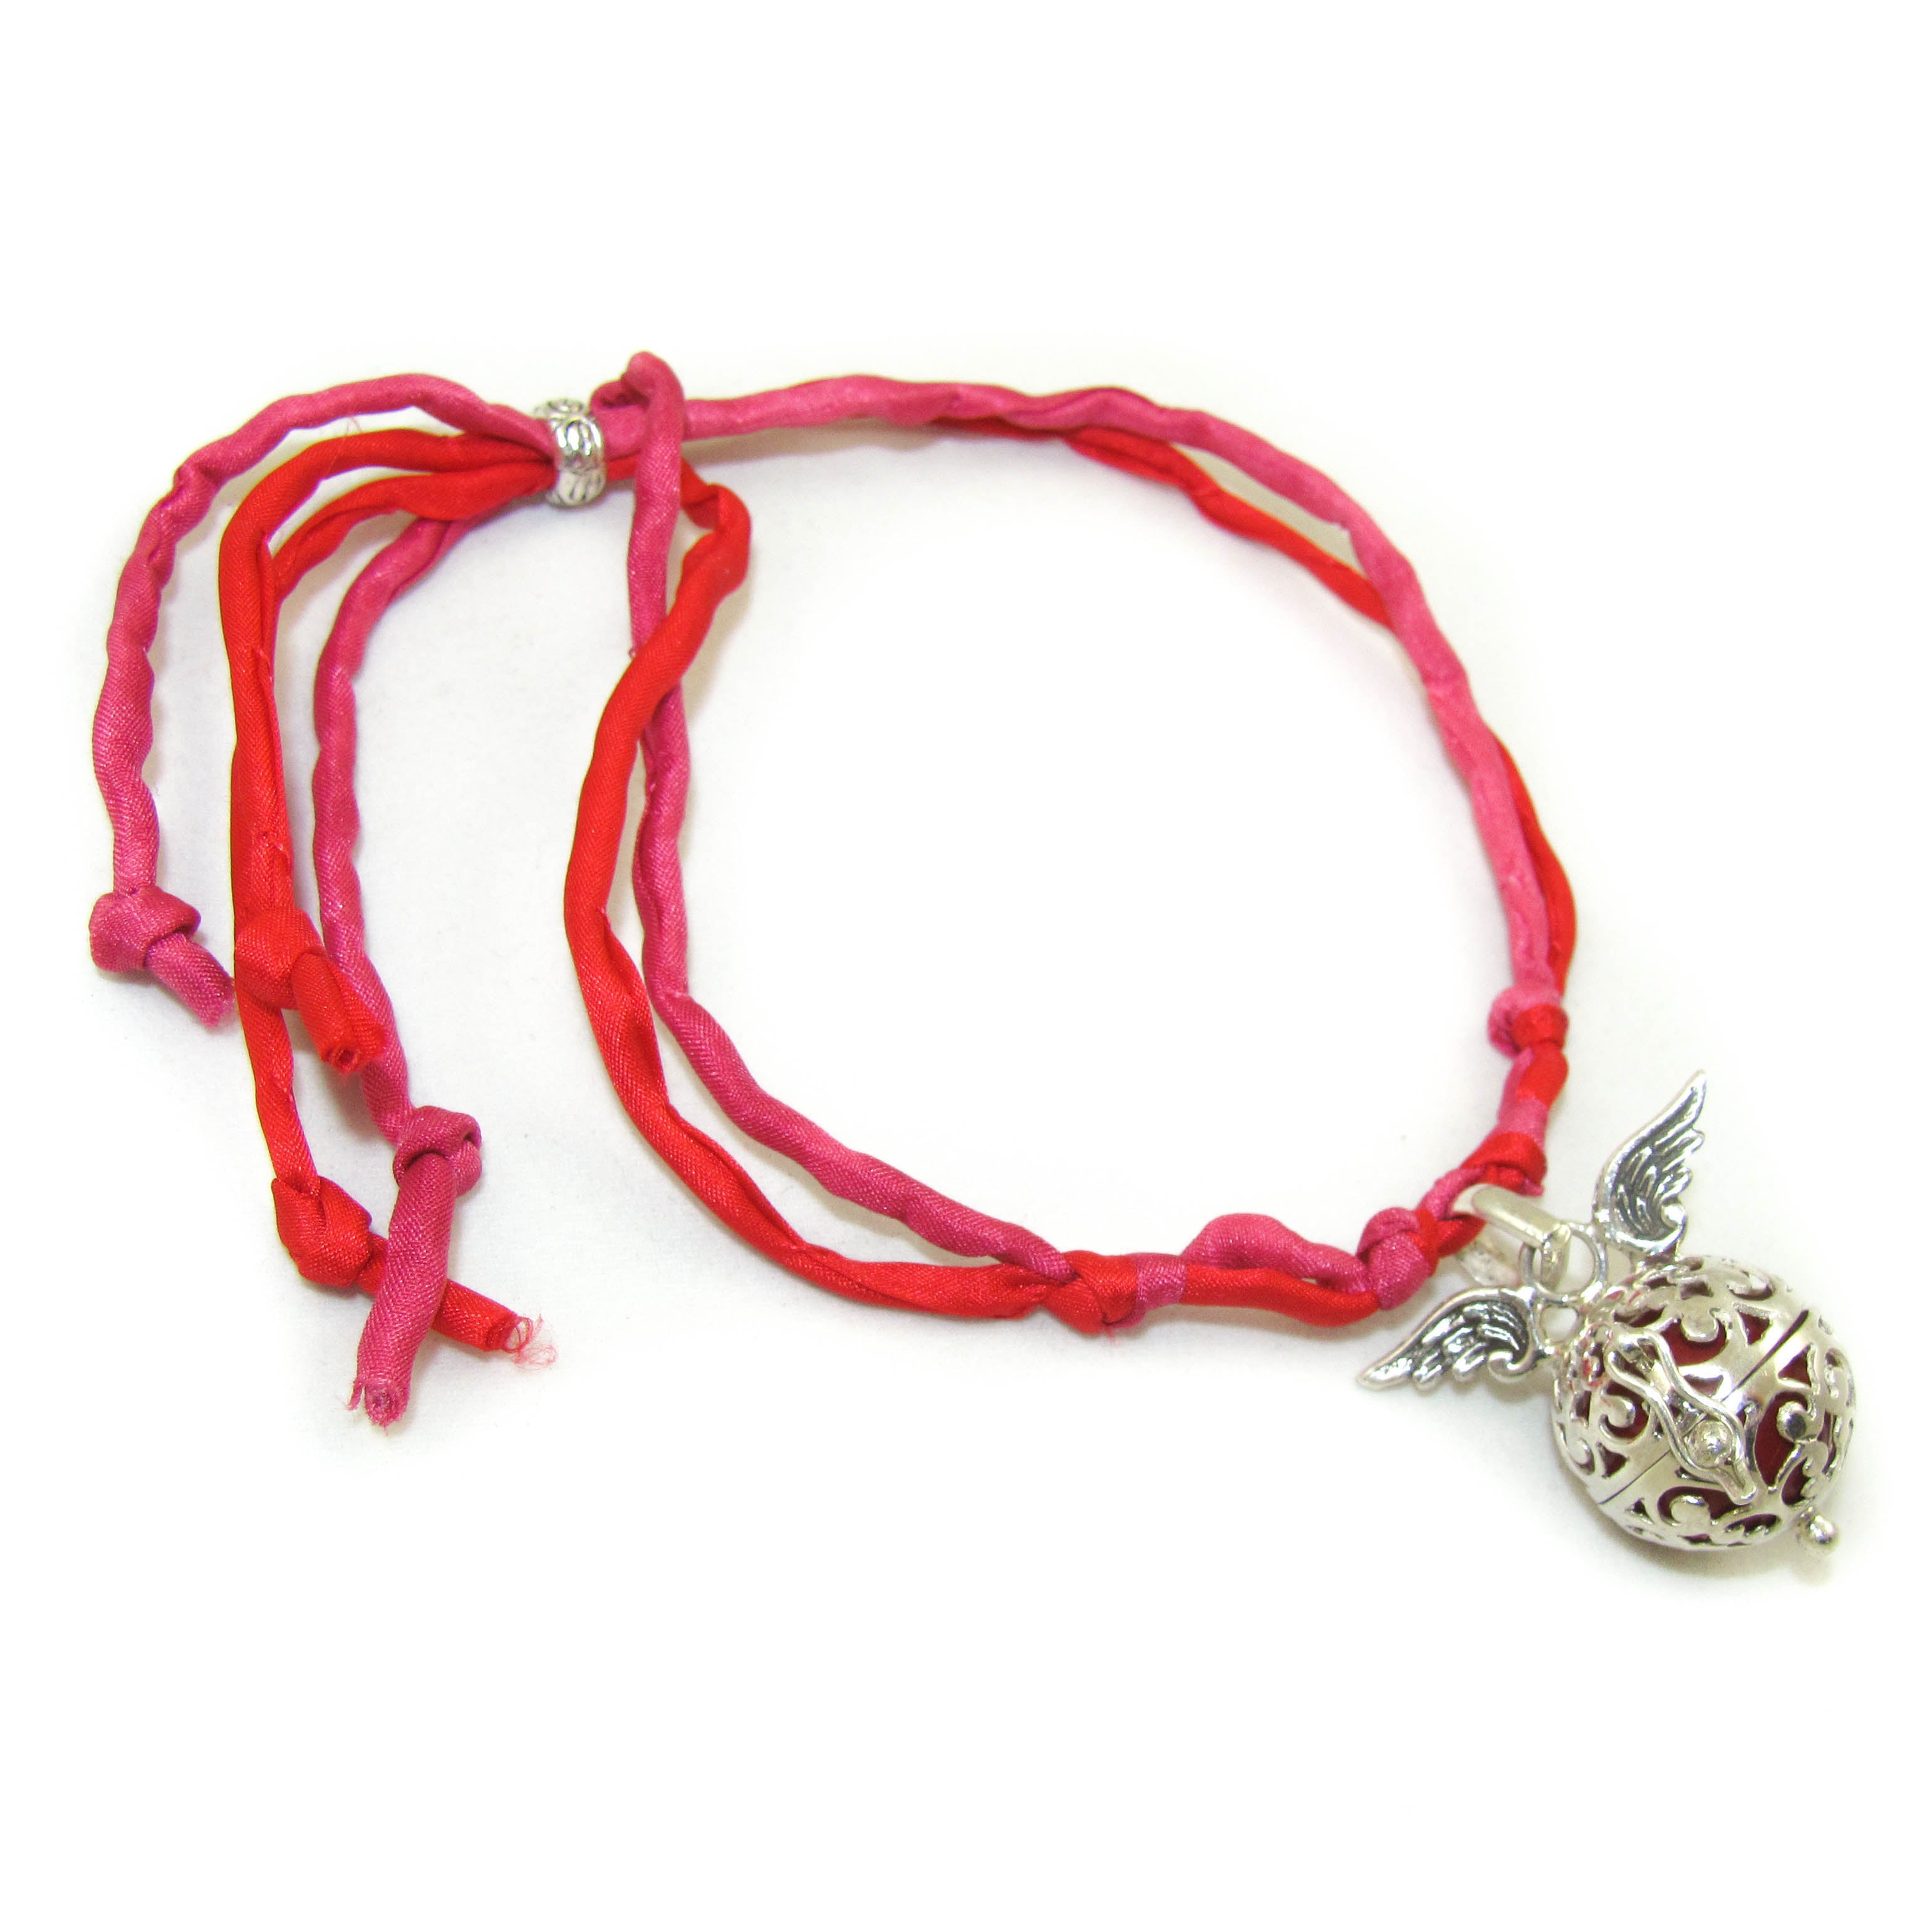 love, peace, happiness - Engelsrufer Armband mit Seide, Rot & Pink - Kraft, Lebenswillen